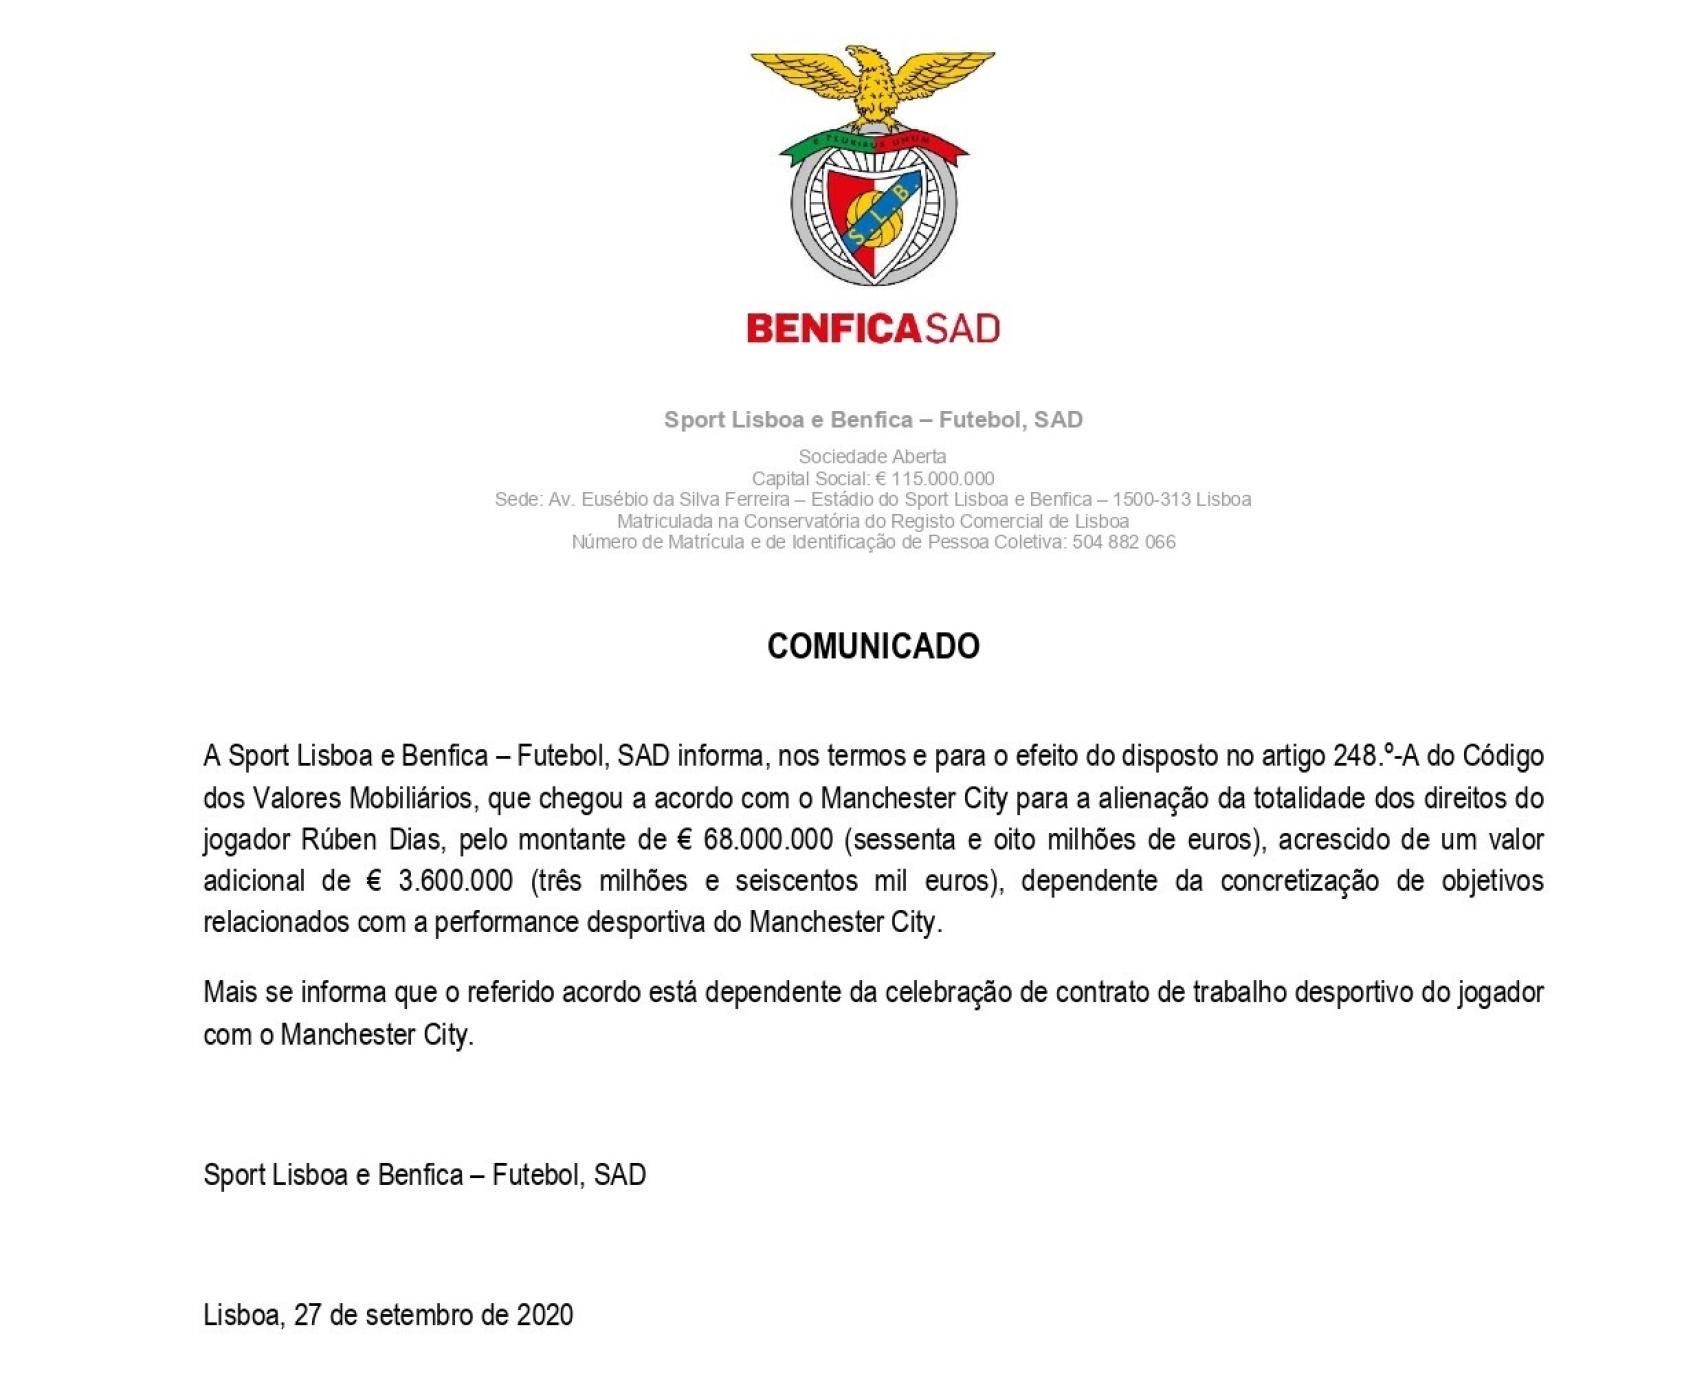 La nota del Benfica a la CMVM de Portugal anunciando la salida de Rubén Dias